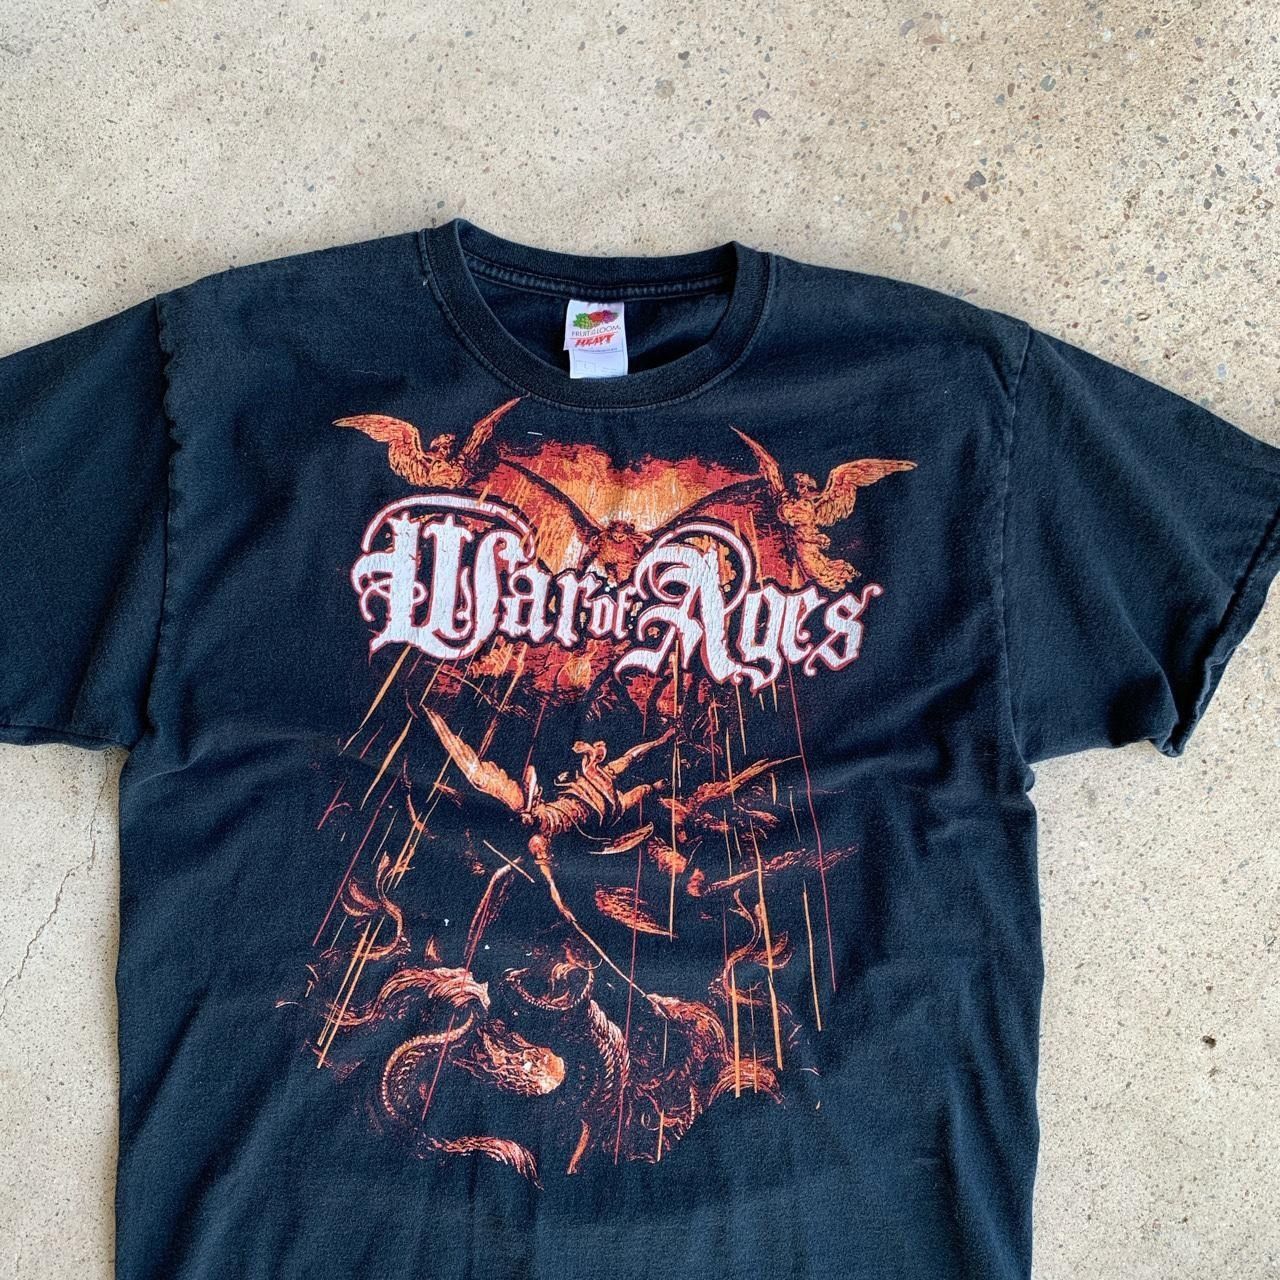 Vintage Vintage Y2k War Of Ages Christian Metal Band T Shirt Size US L / EU 52-54 / 3 - 2 Preview